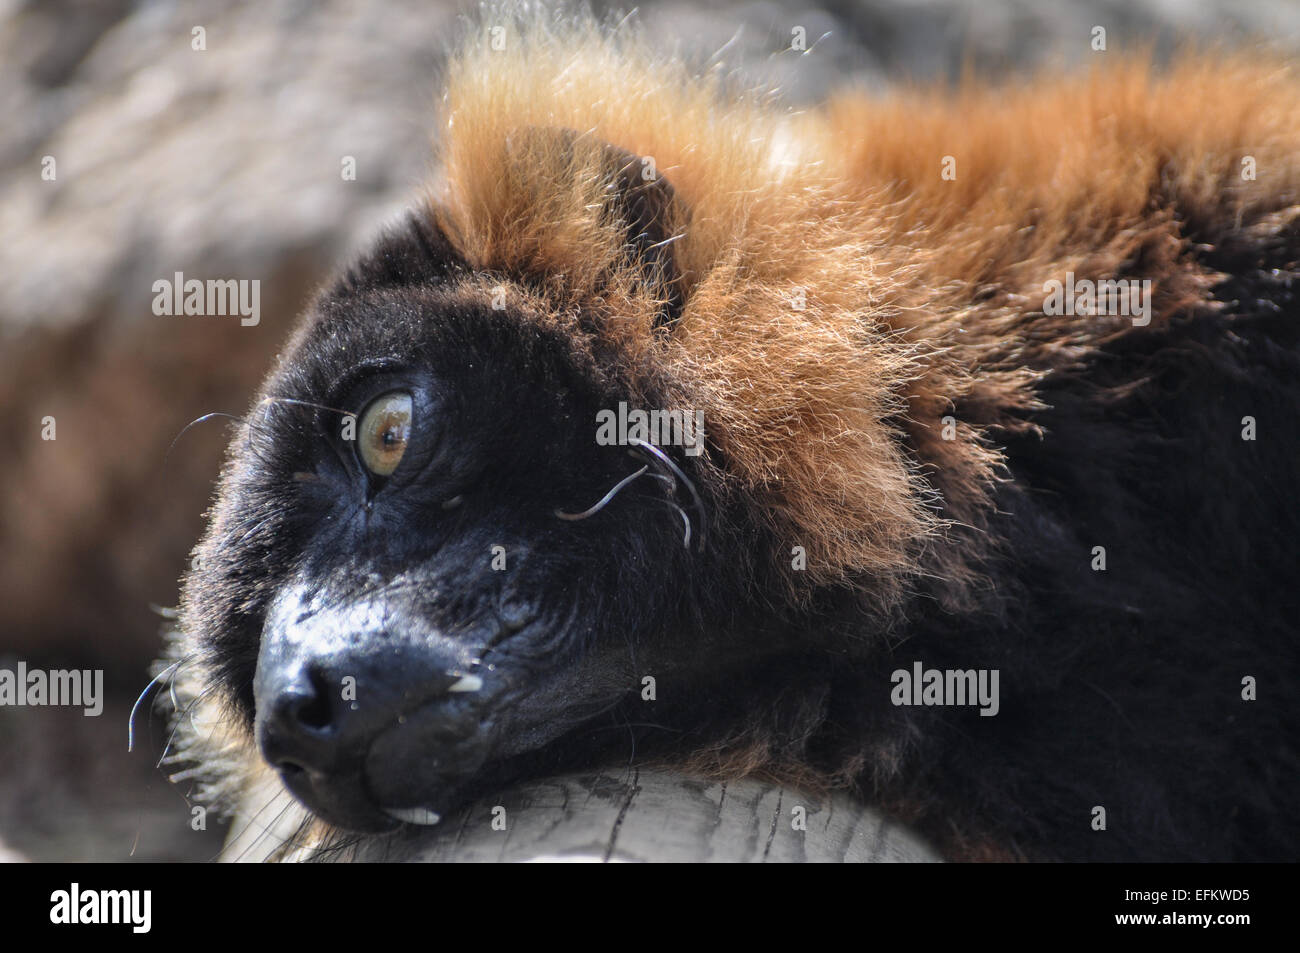 Red lemur sunbathing on a log Stock Photo